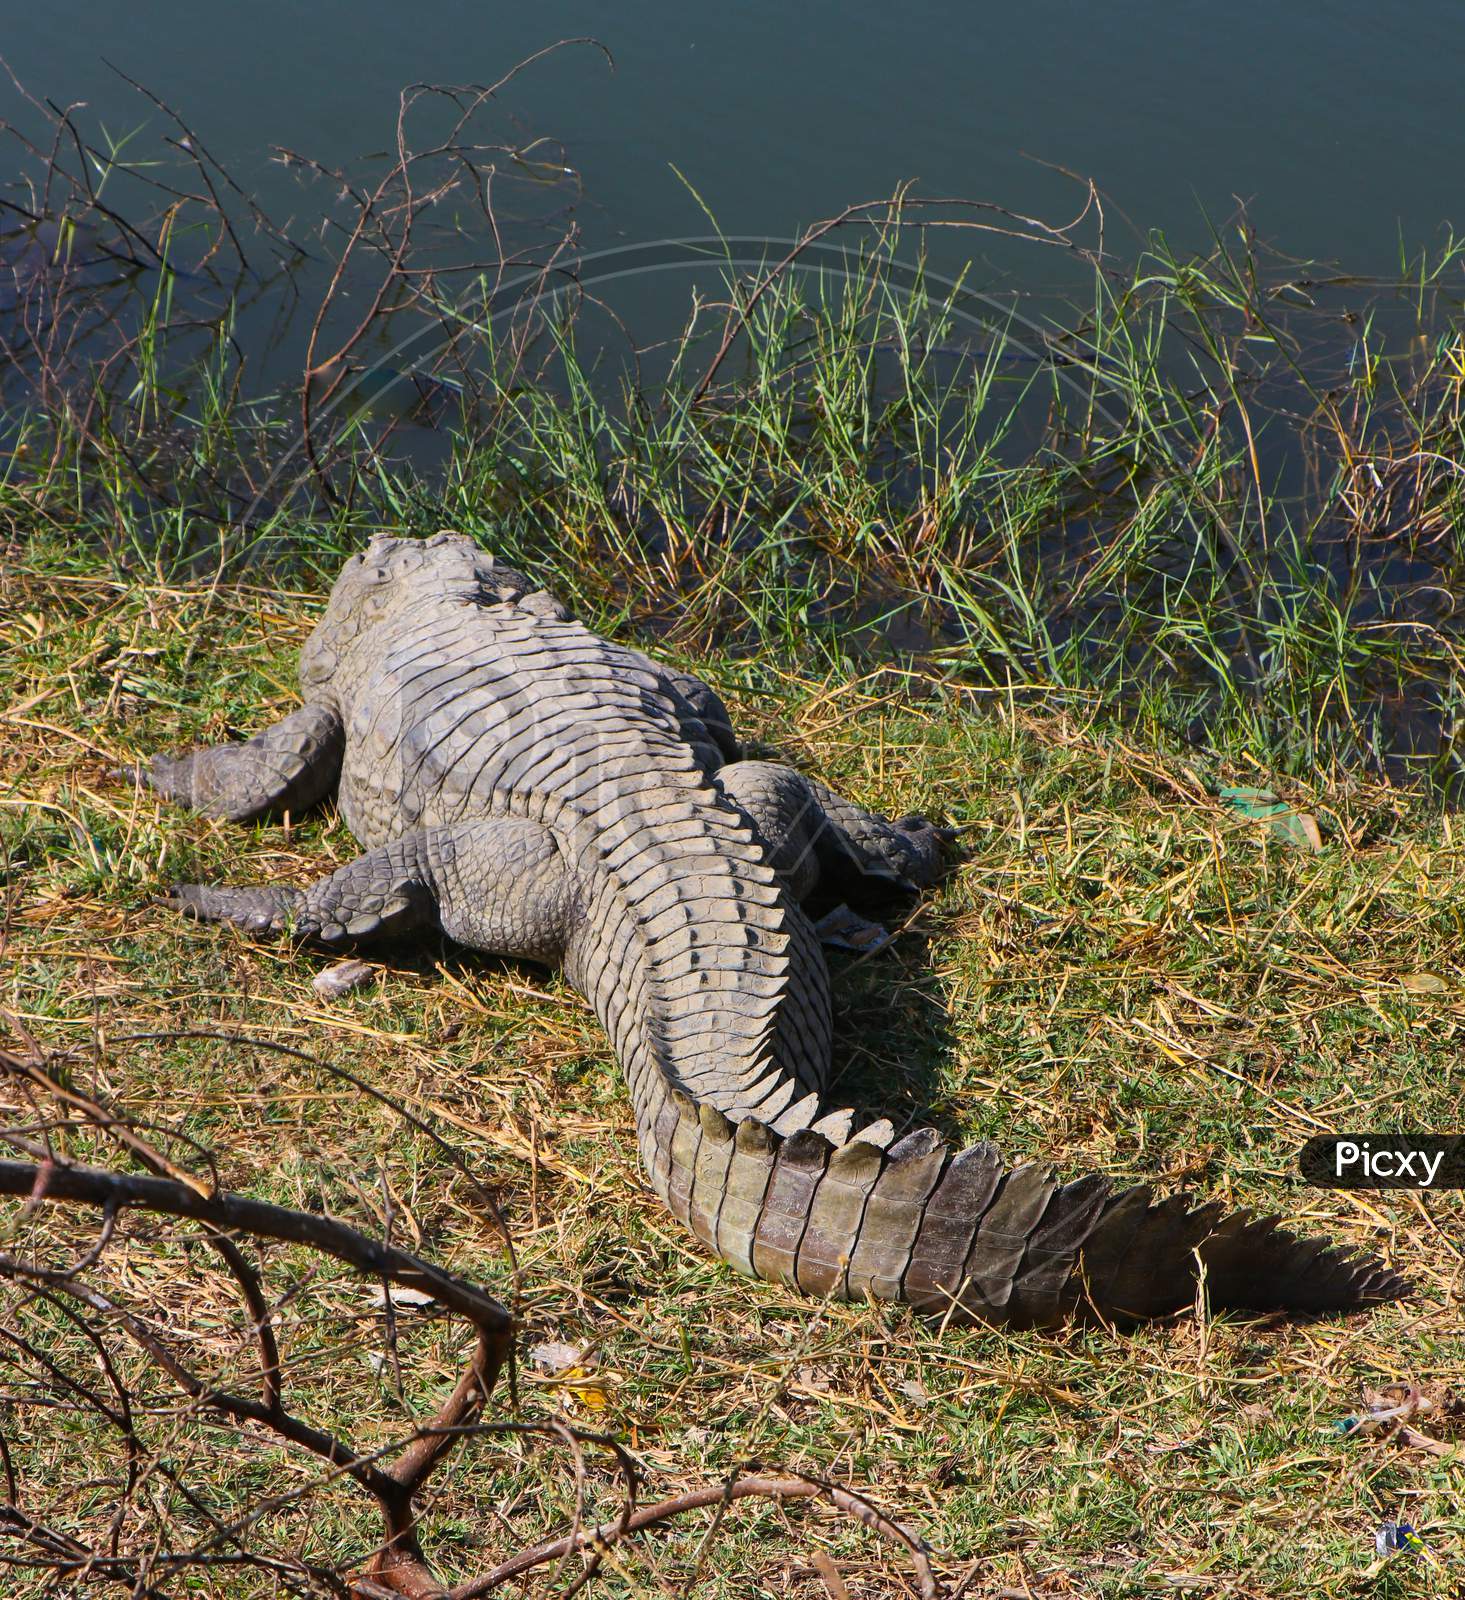 Crocodile sunbathing on the sides of a lake